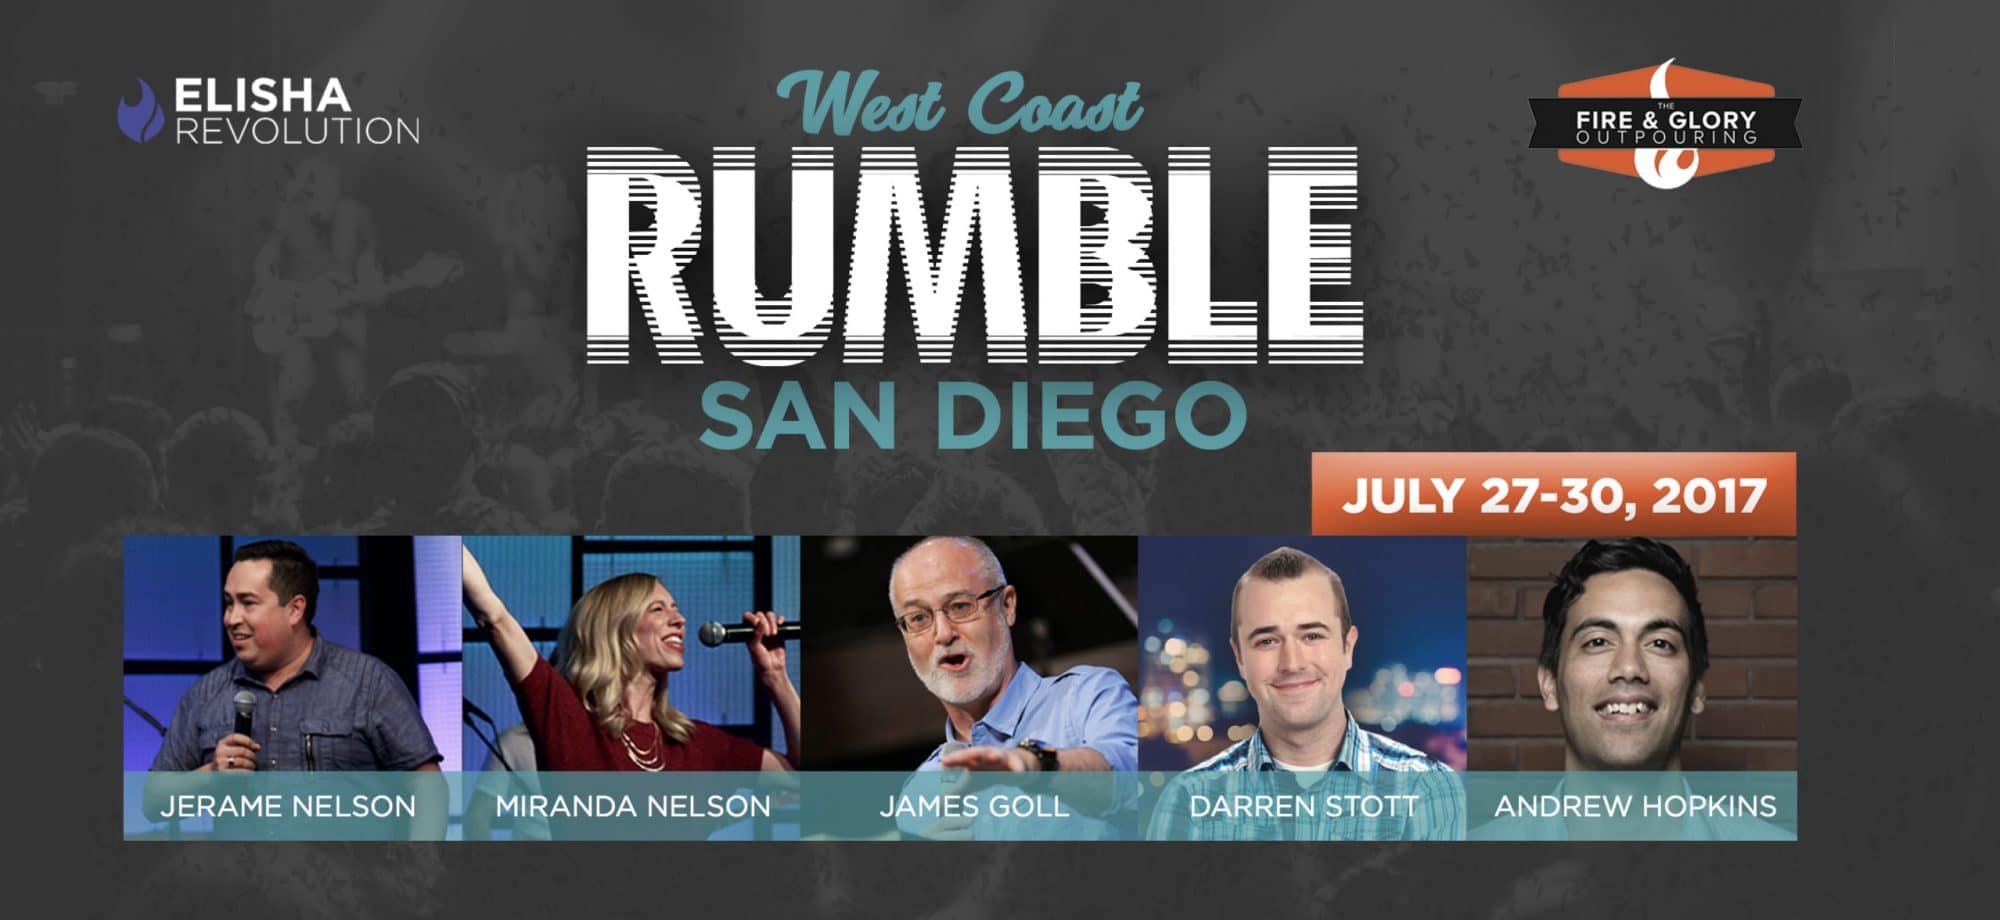 West Coast Rumble San Diego